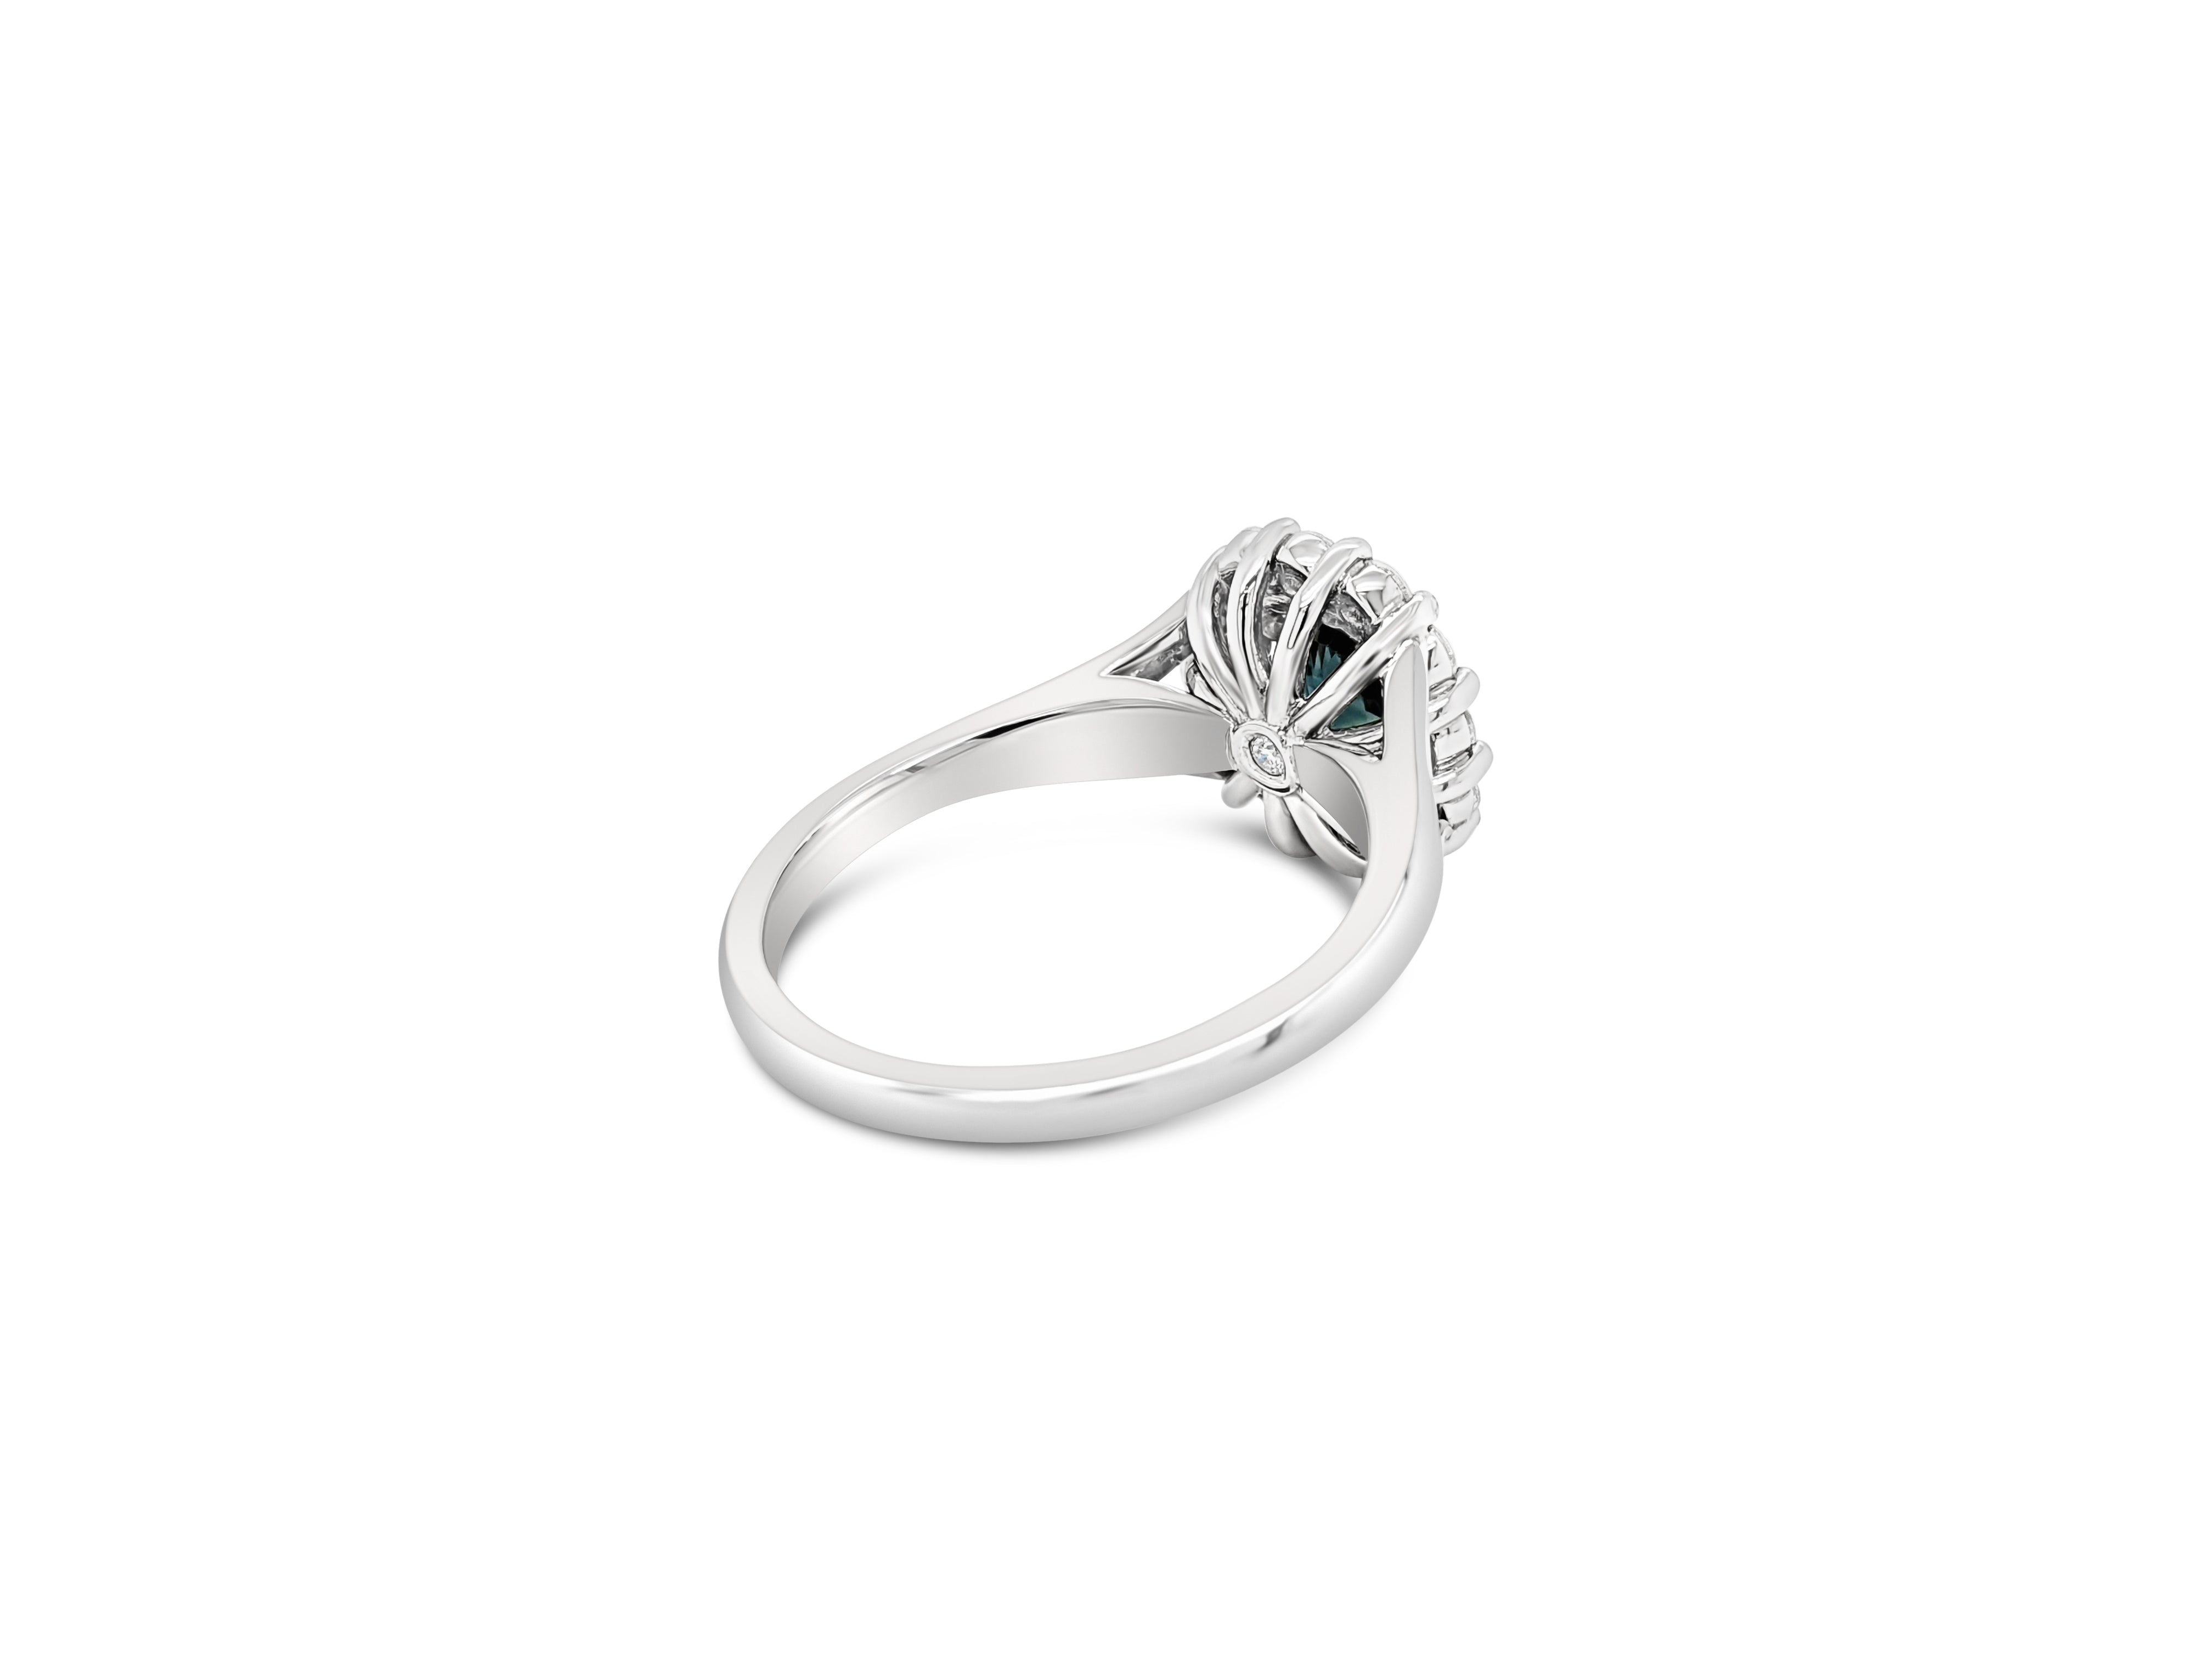 Australian Sapphire Halo Ring